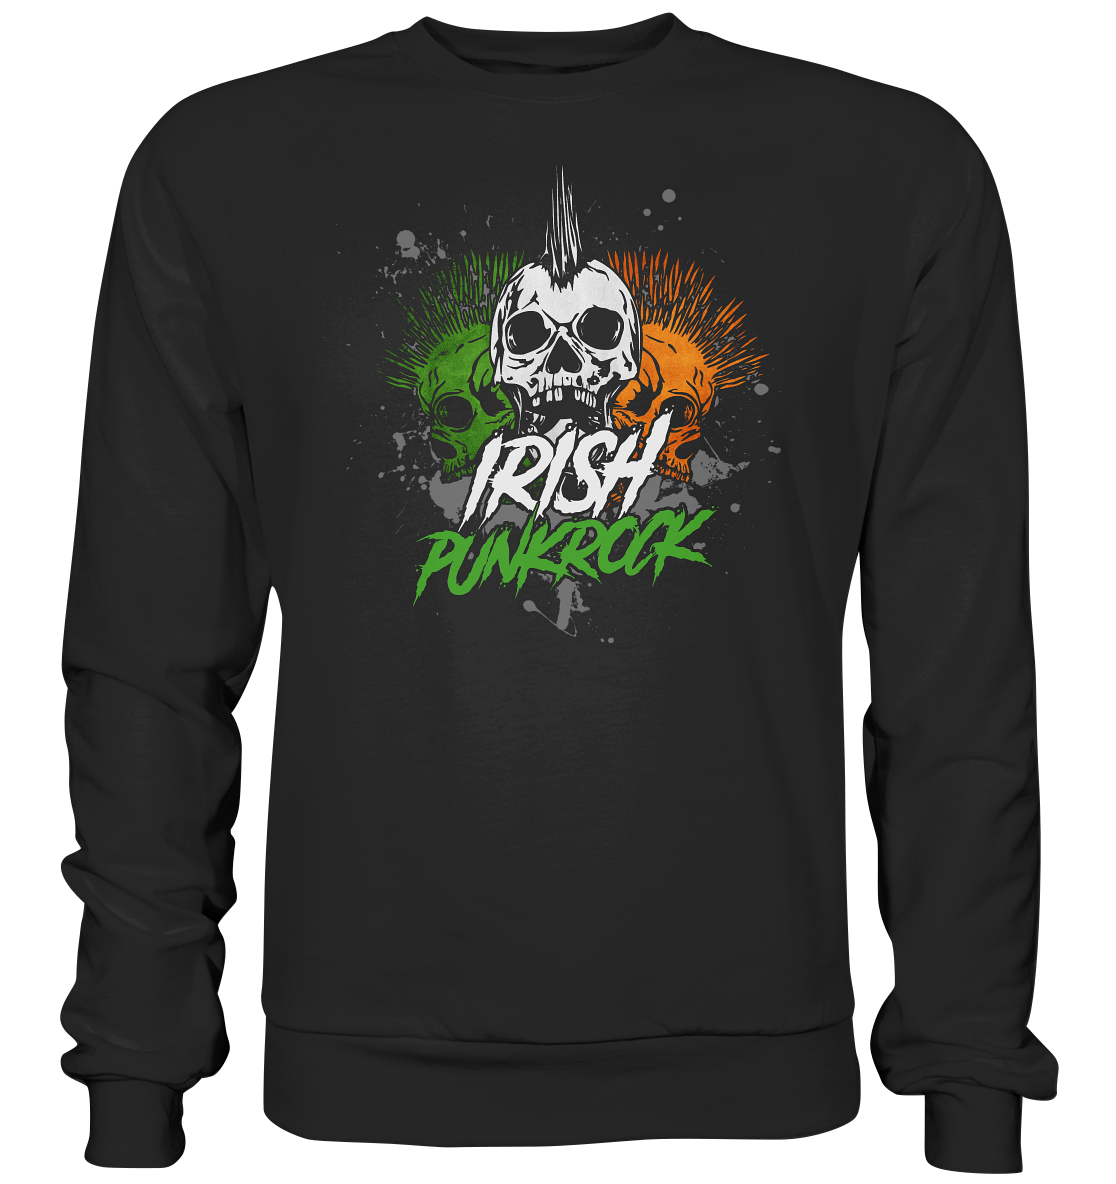 Irish Punkrock - Premium Sweatshirt